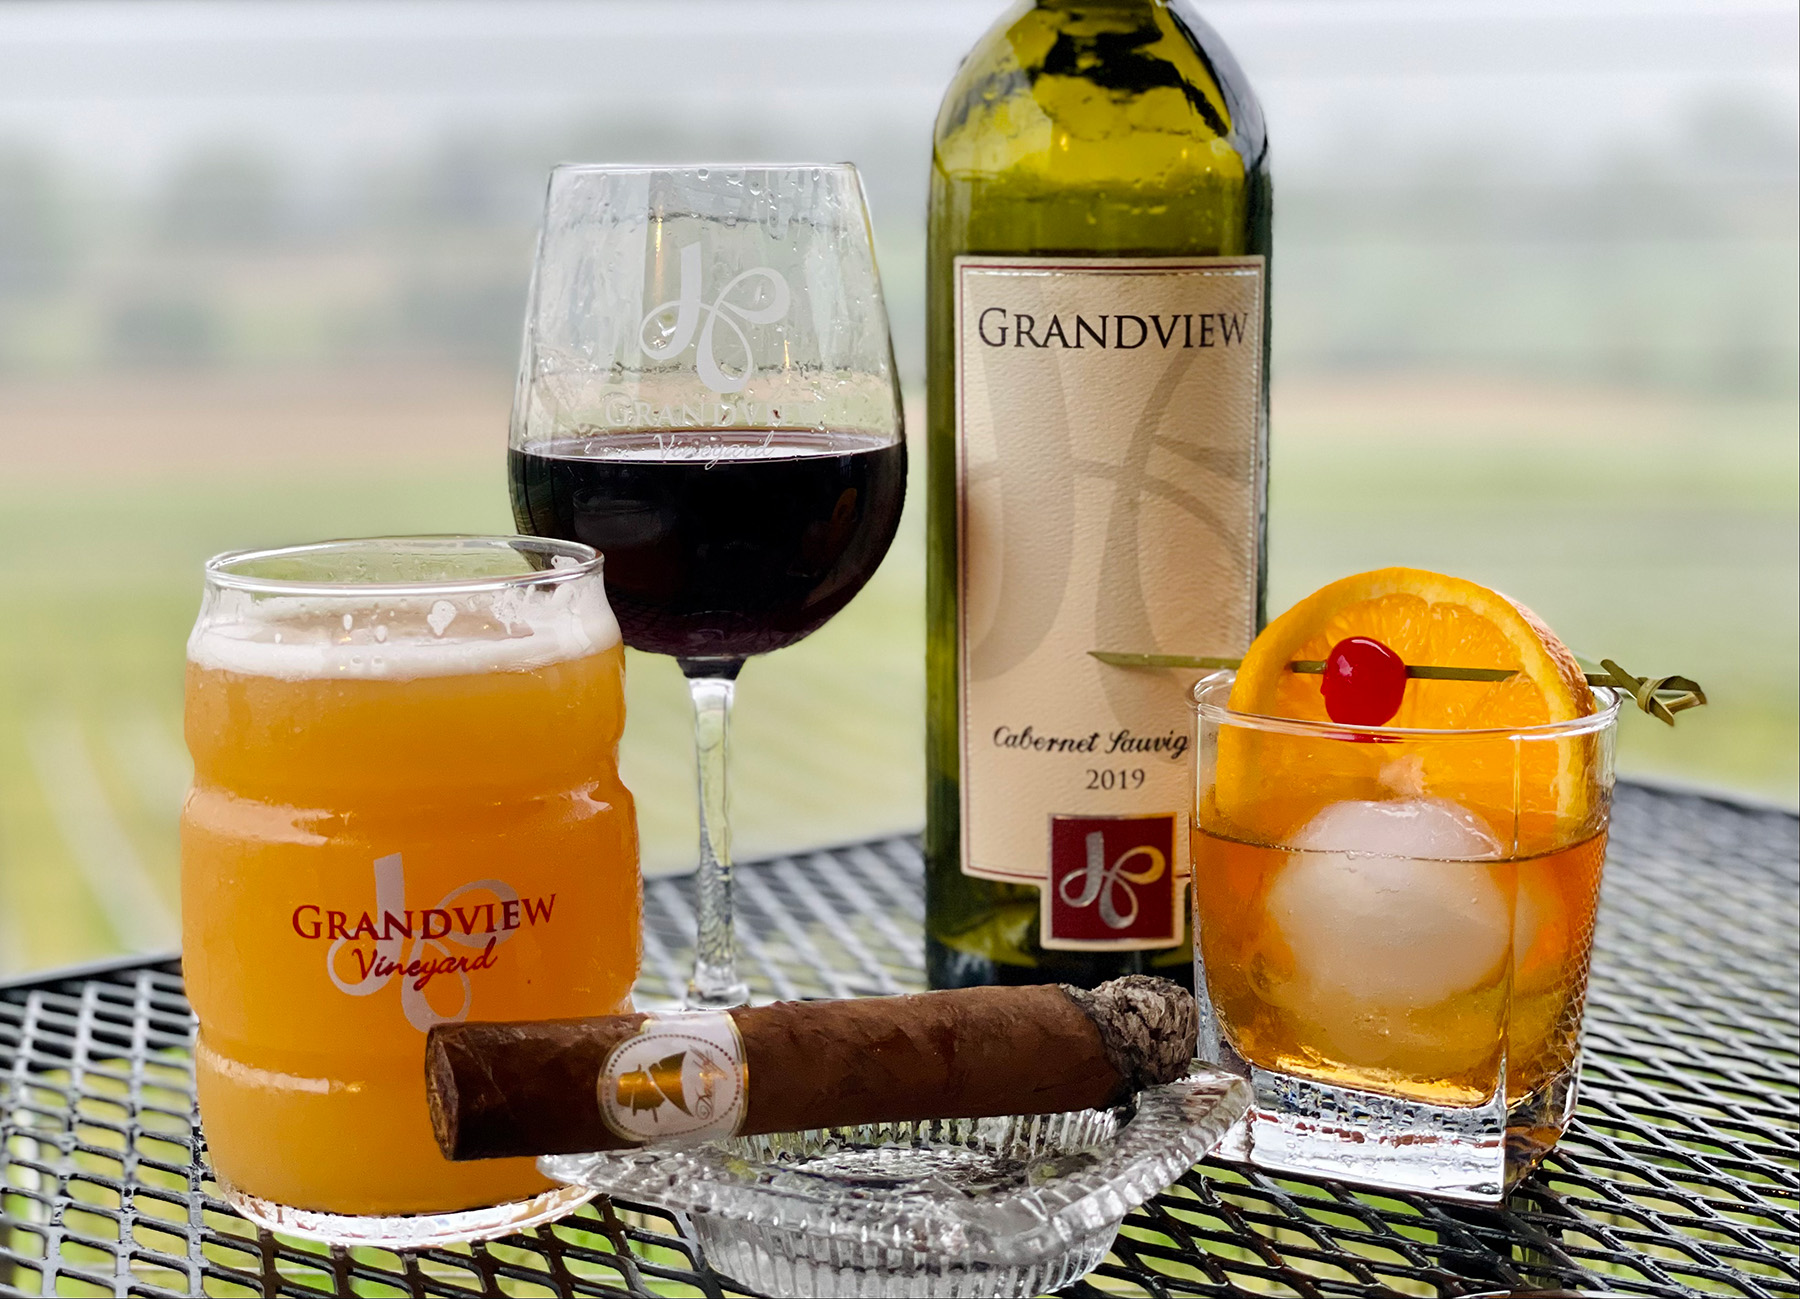 Cigar and GrandView Wine displayed on table overlooking vineyards